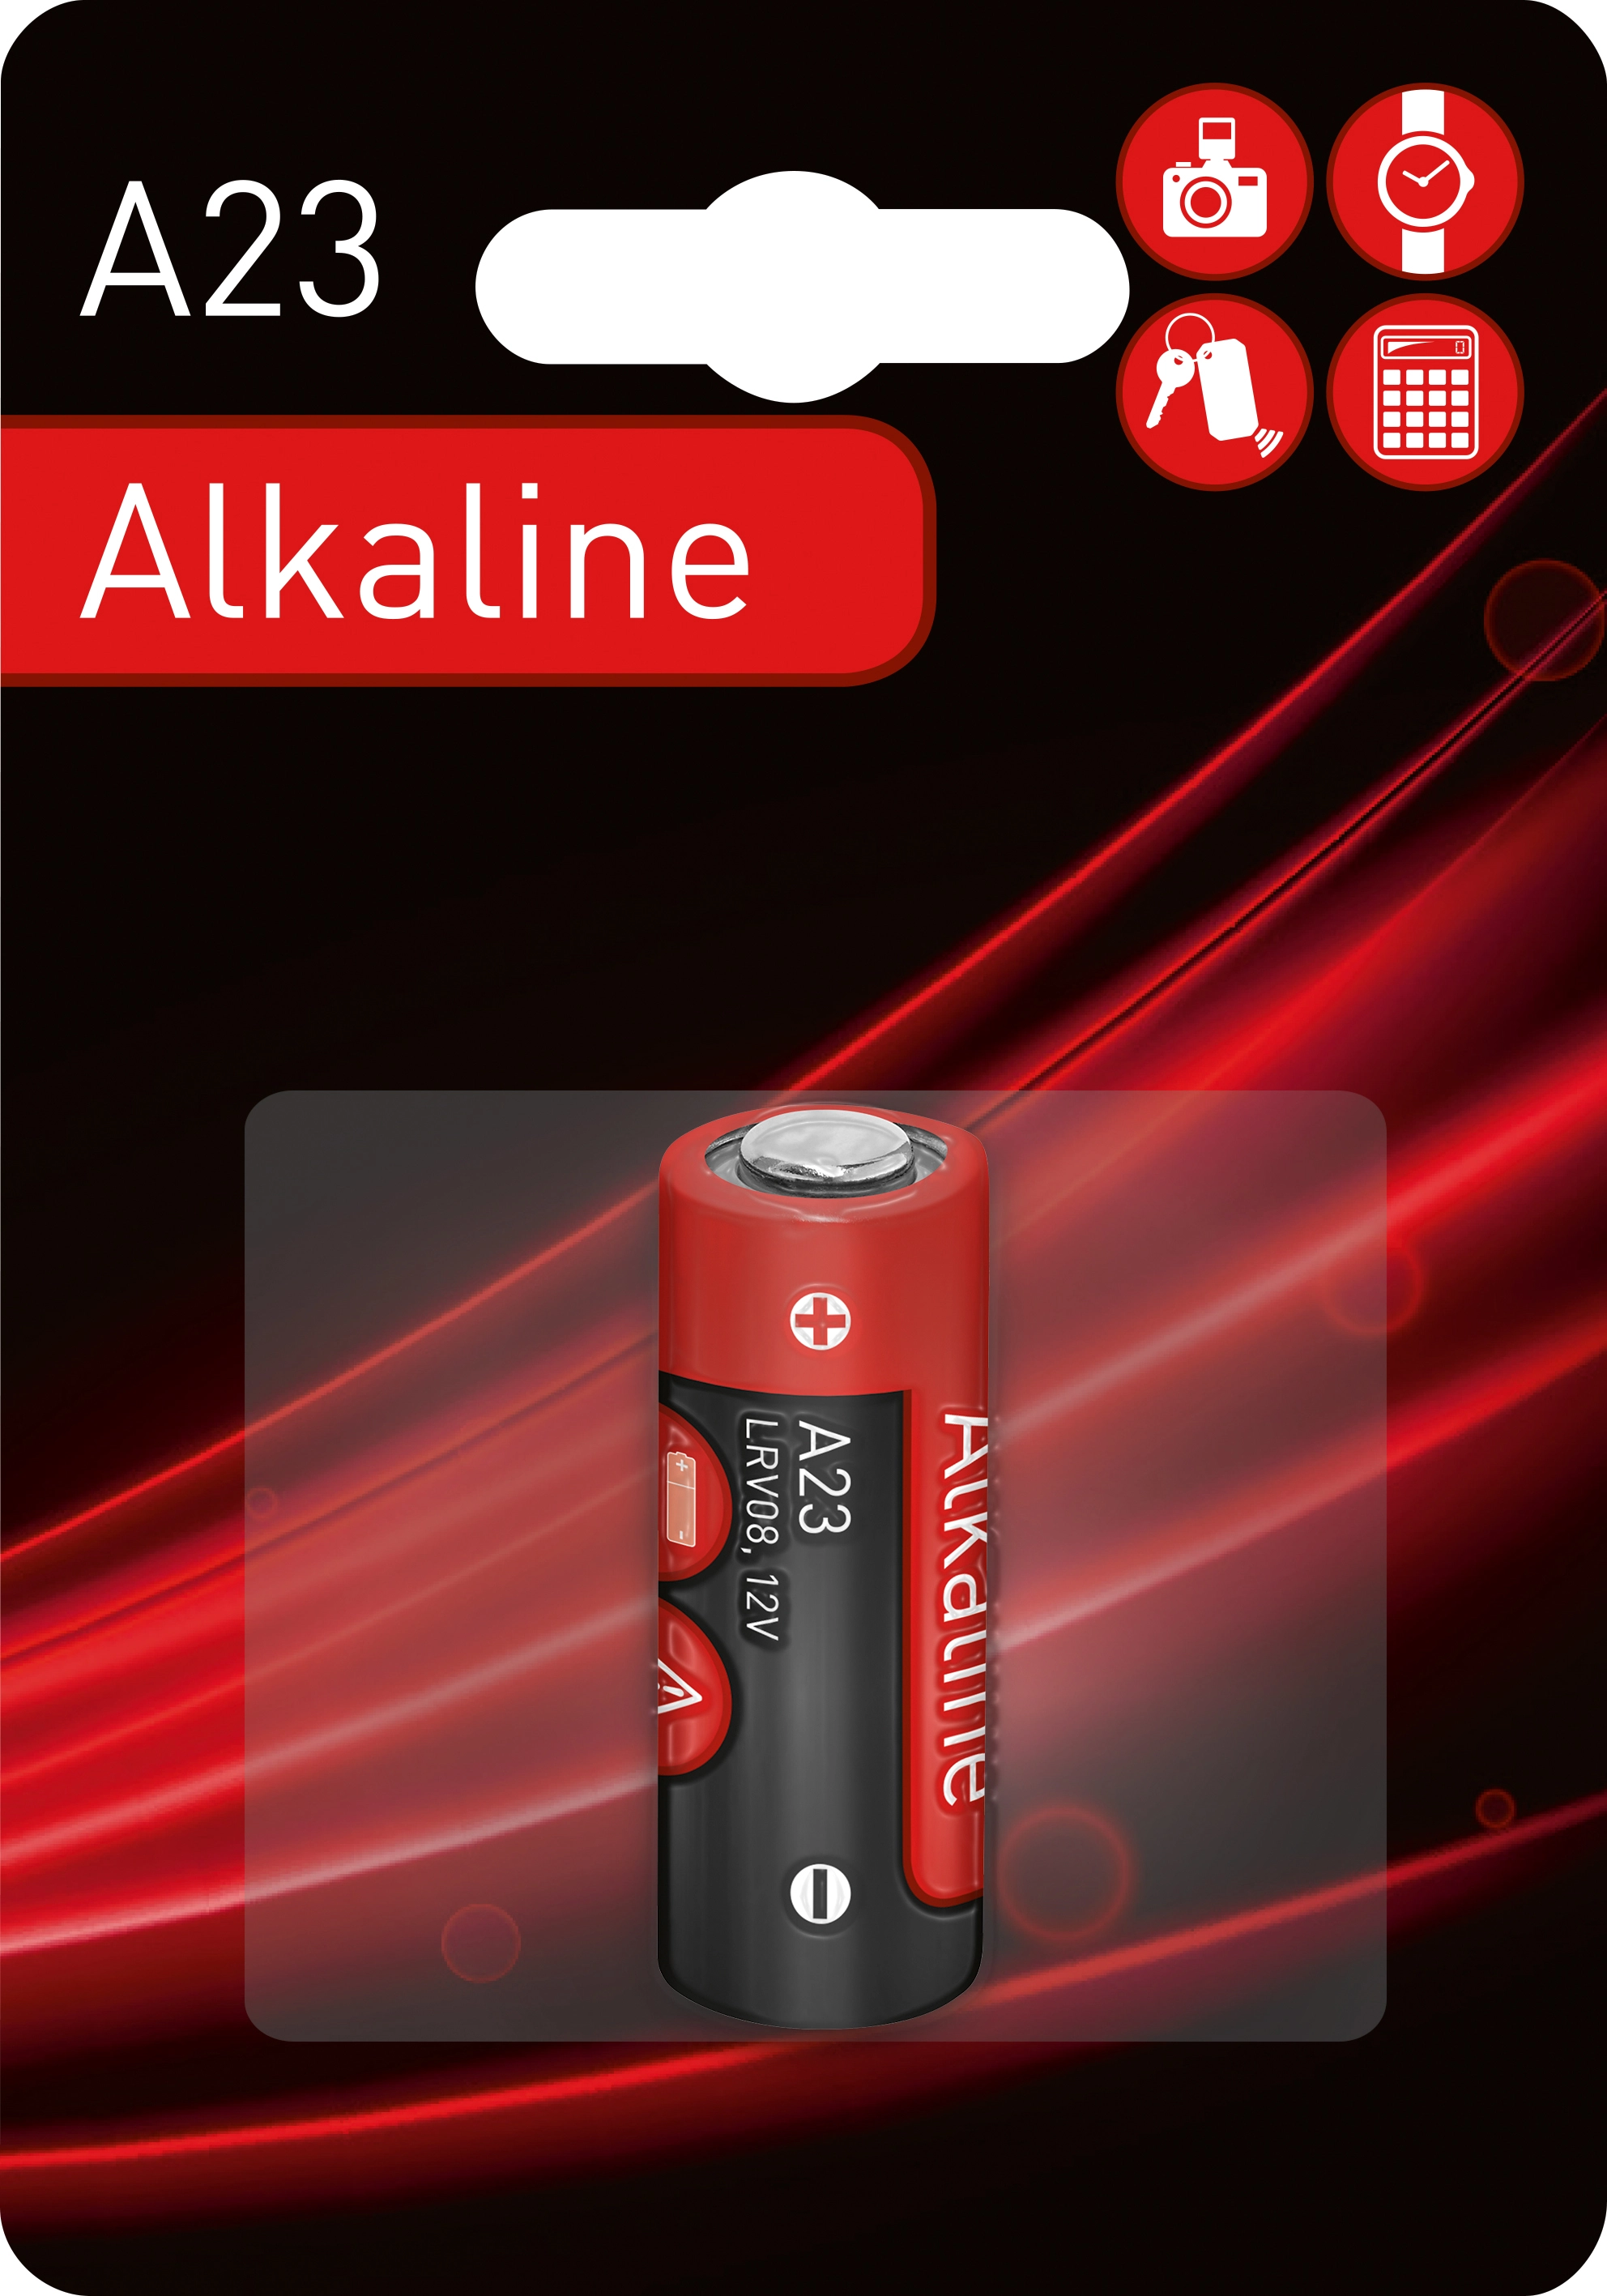 ▷ Varta V23GA 12V Alkaline Batterie 12V kaufen